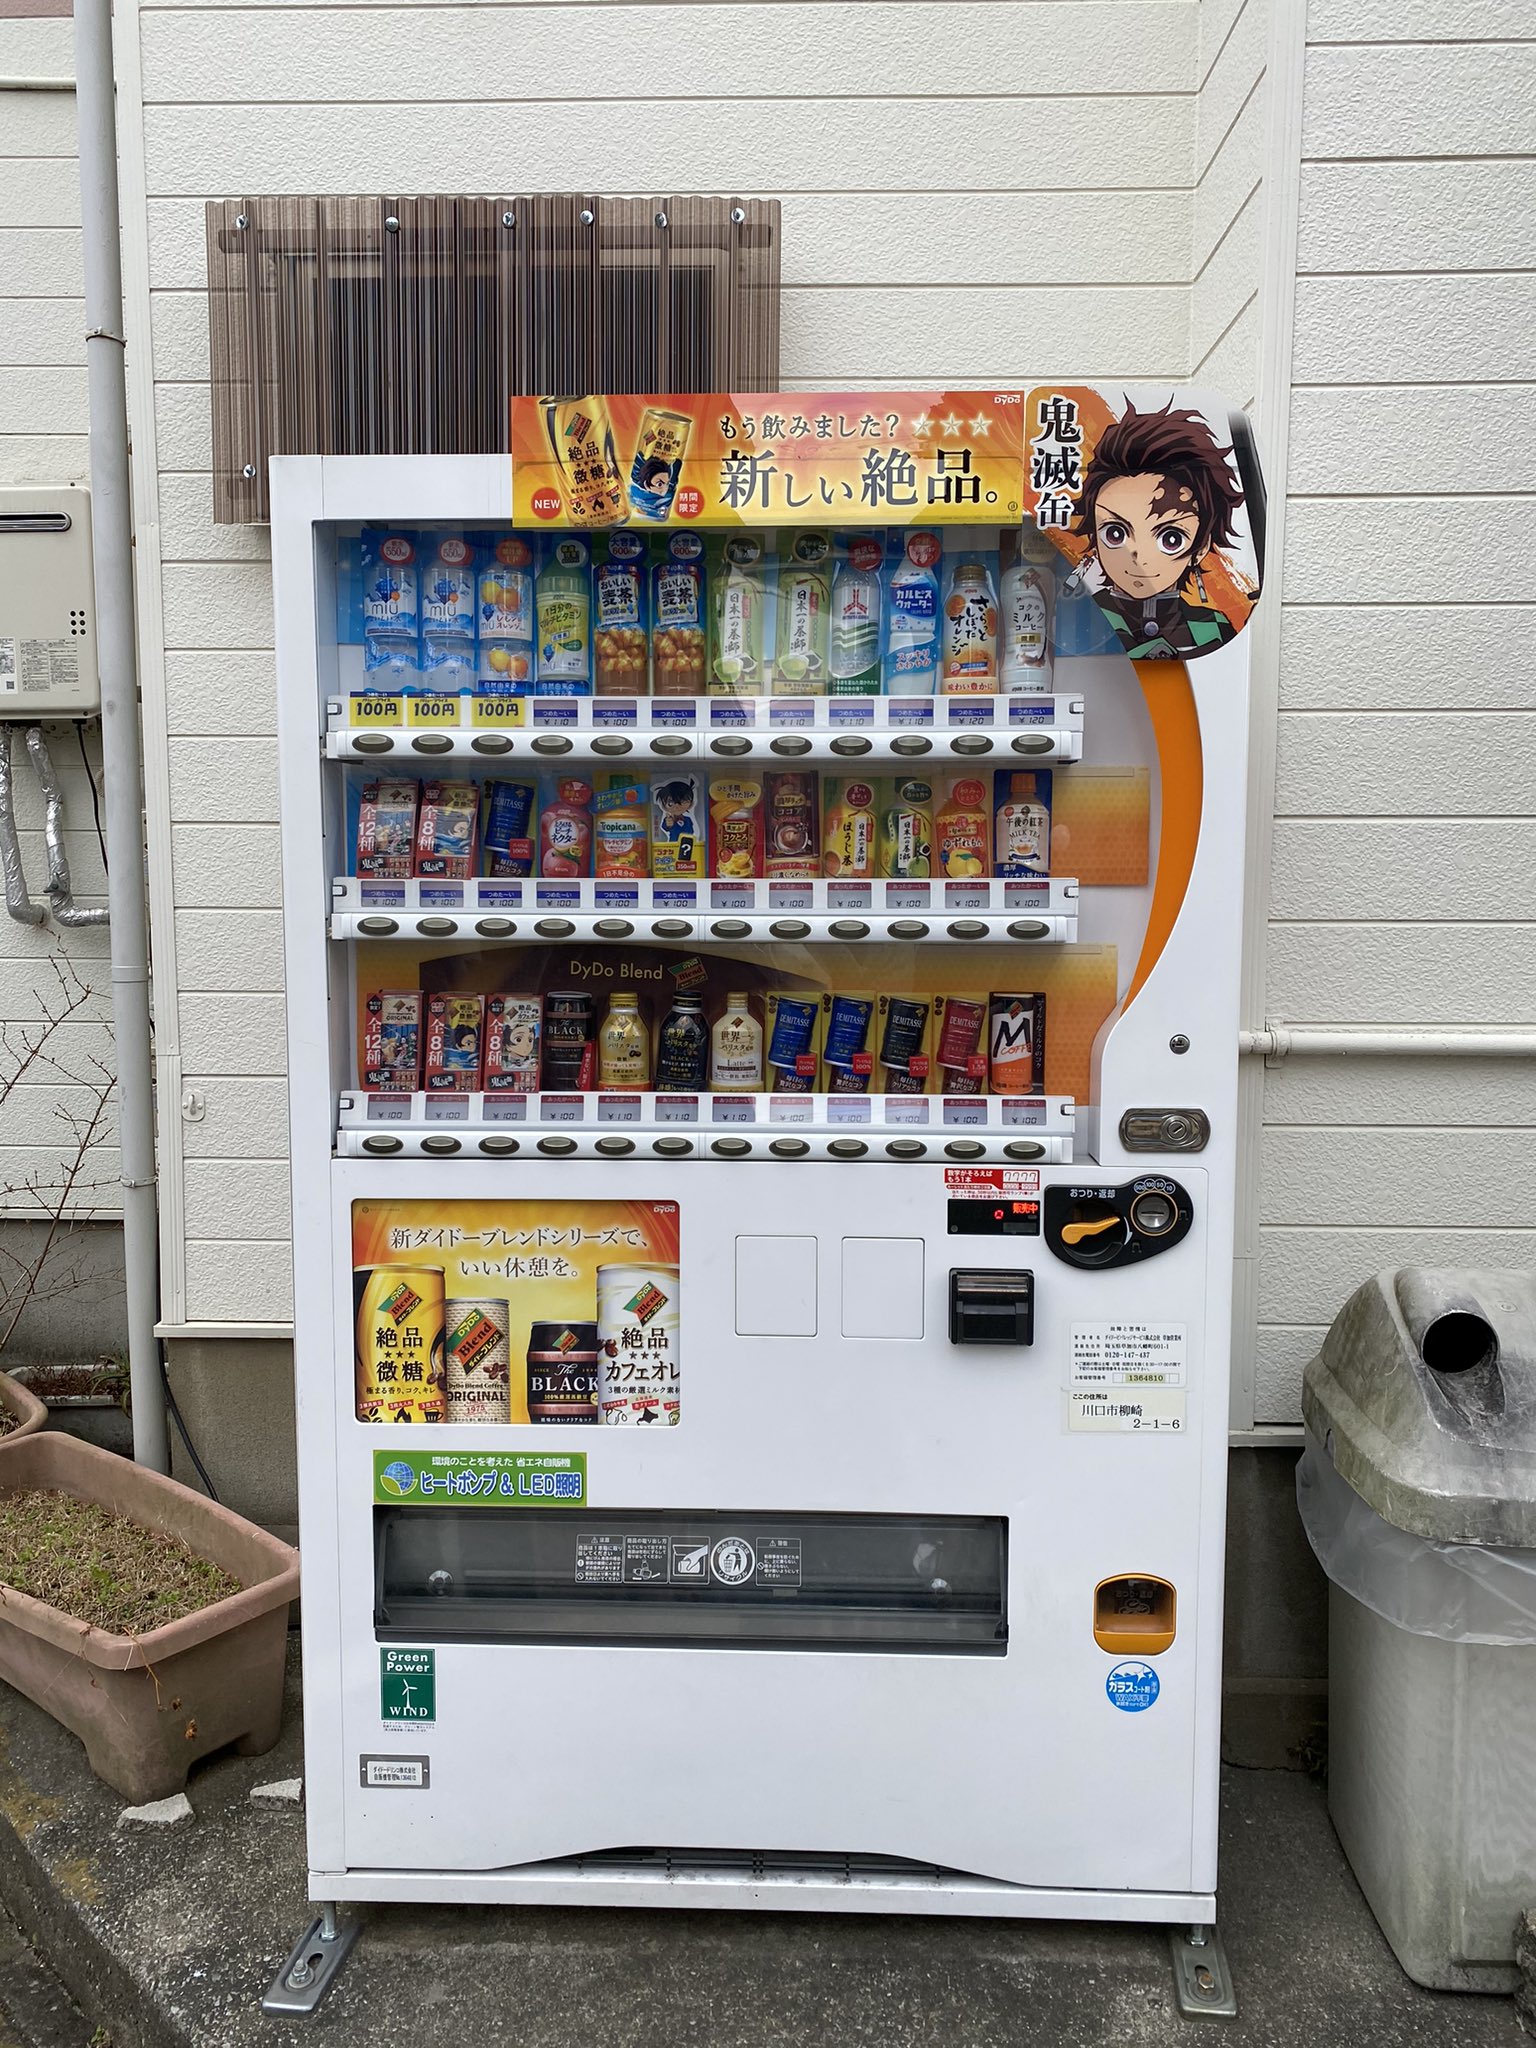 Demon Slayer vending machine